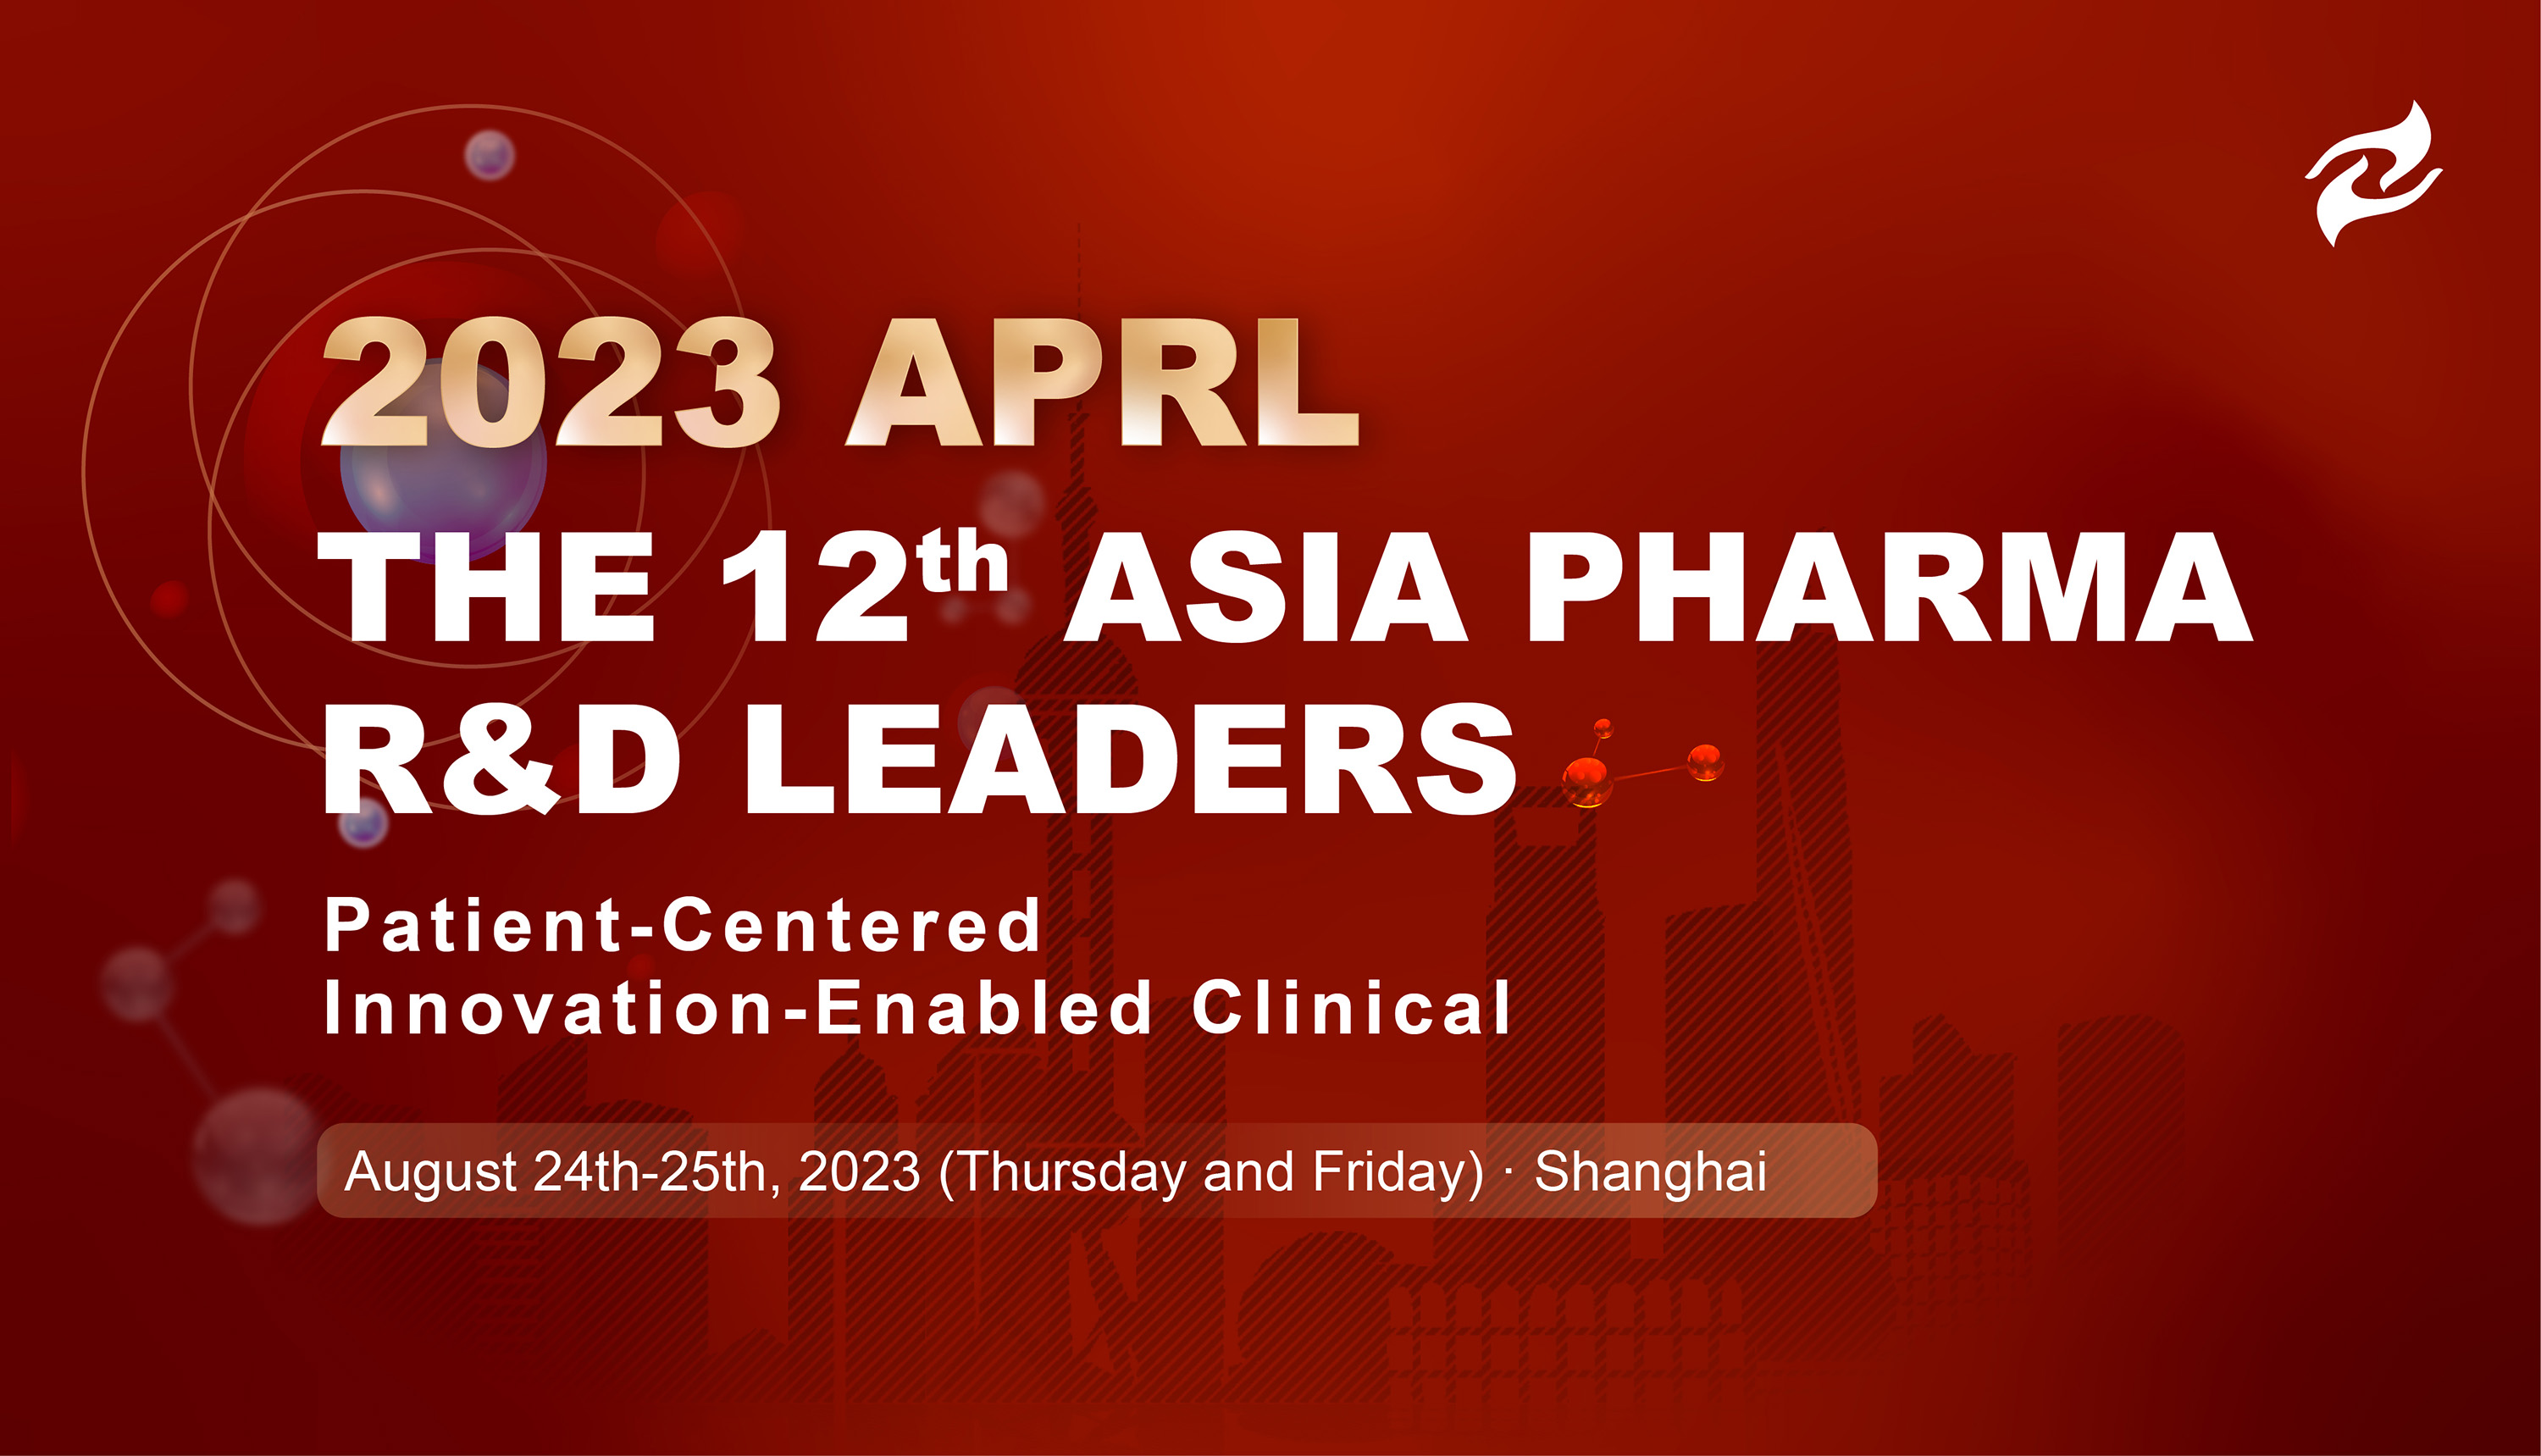 The 12th Asia Pharma R&D Leaders 2023